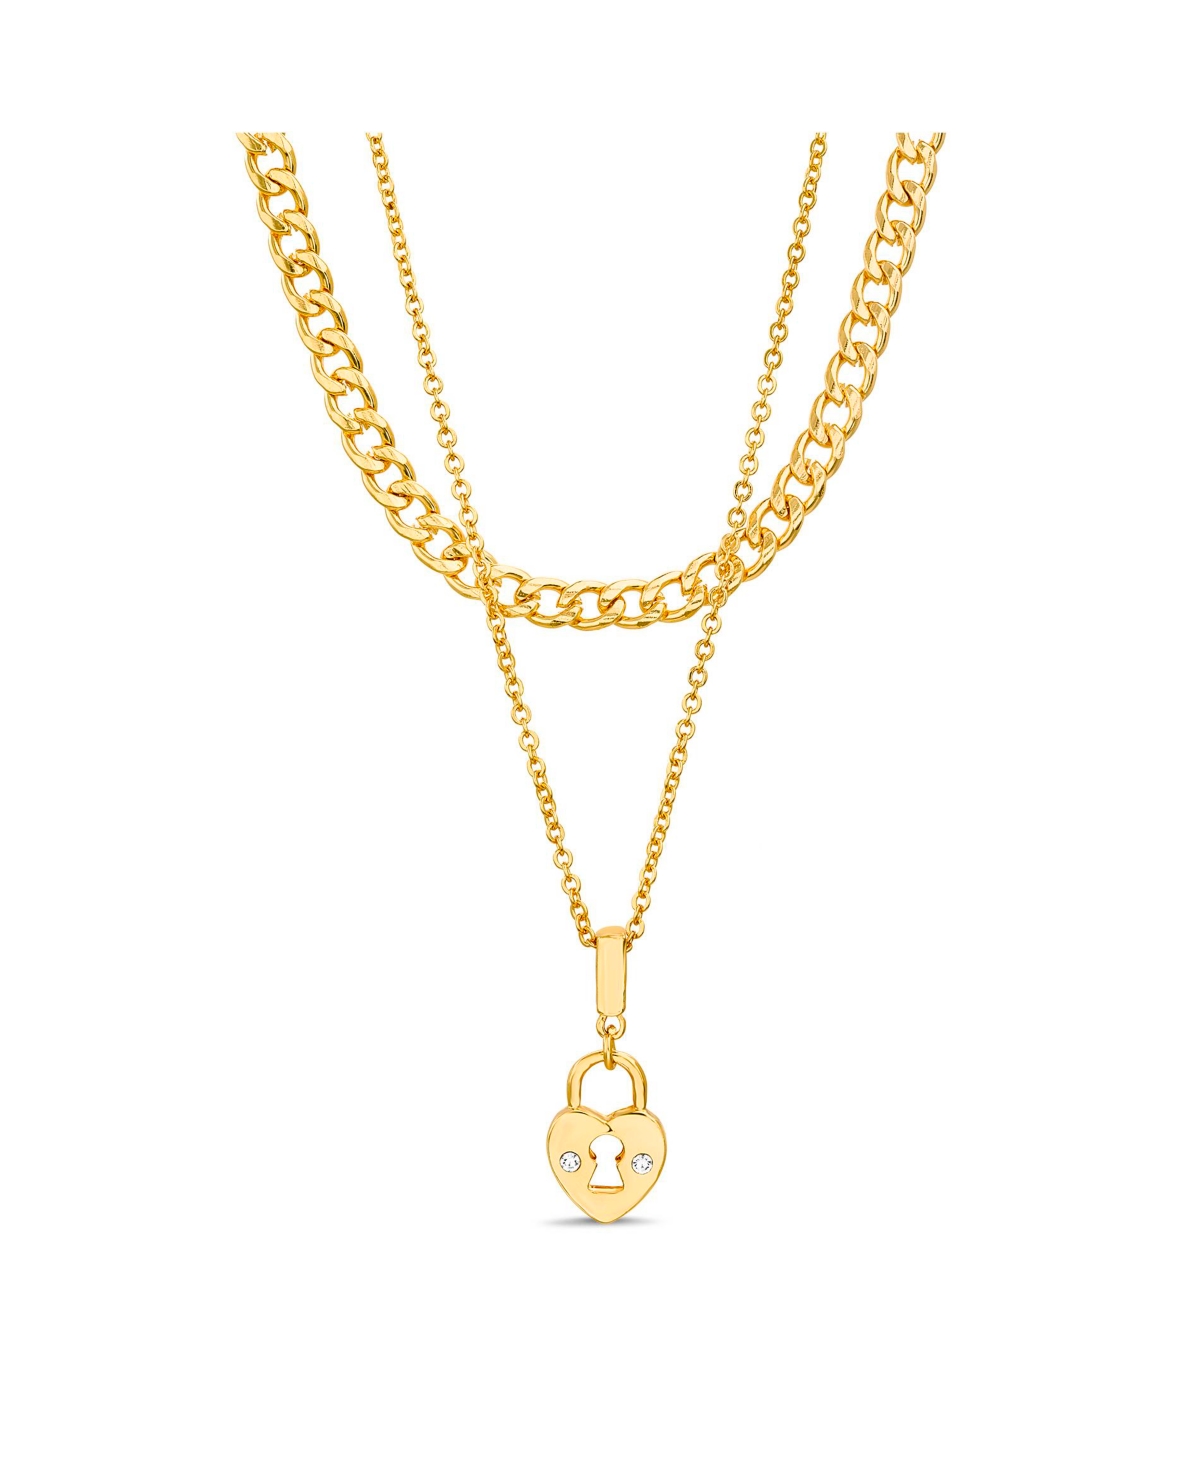 Rhinestone Double Layered Heart Lock Necklace Set - Yellow Gold-Tone